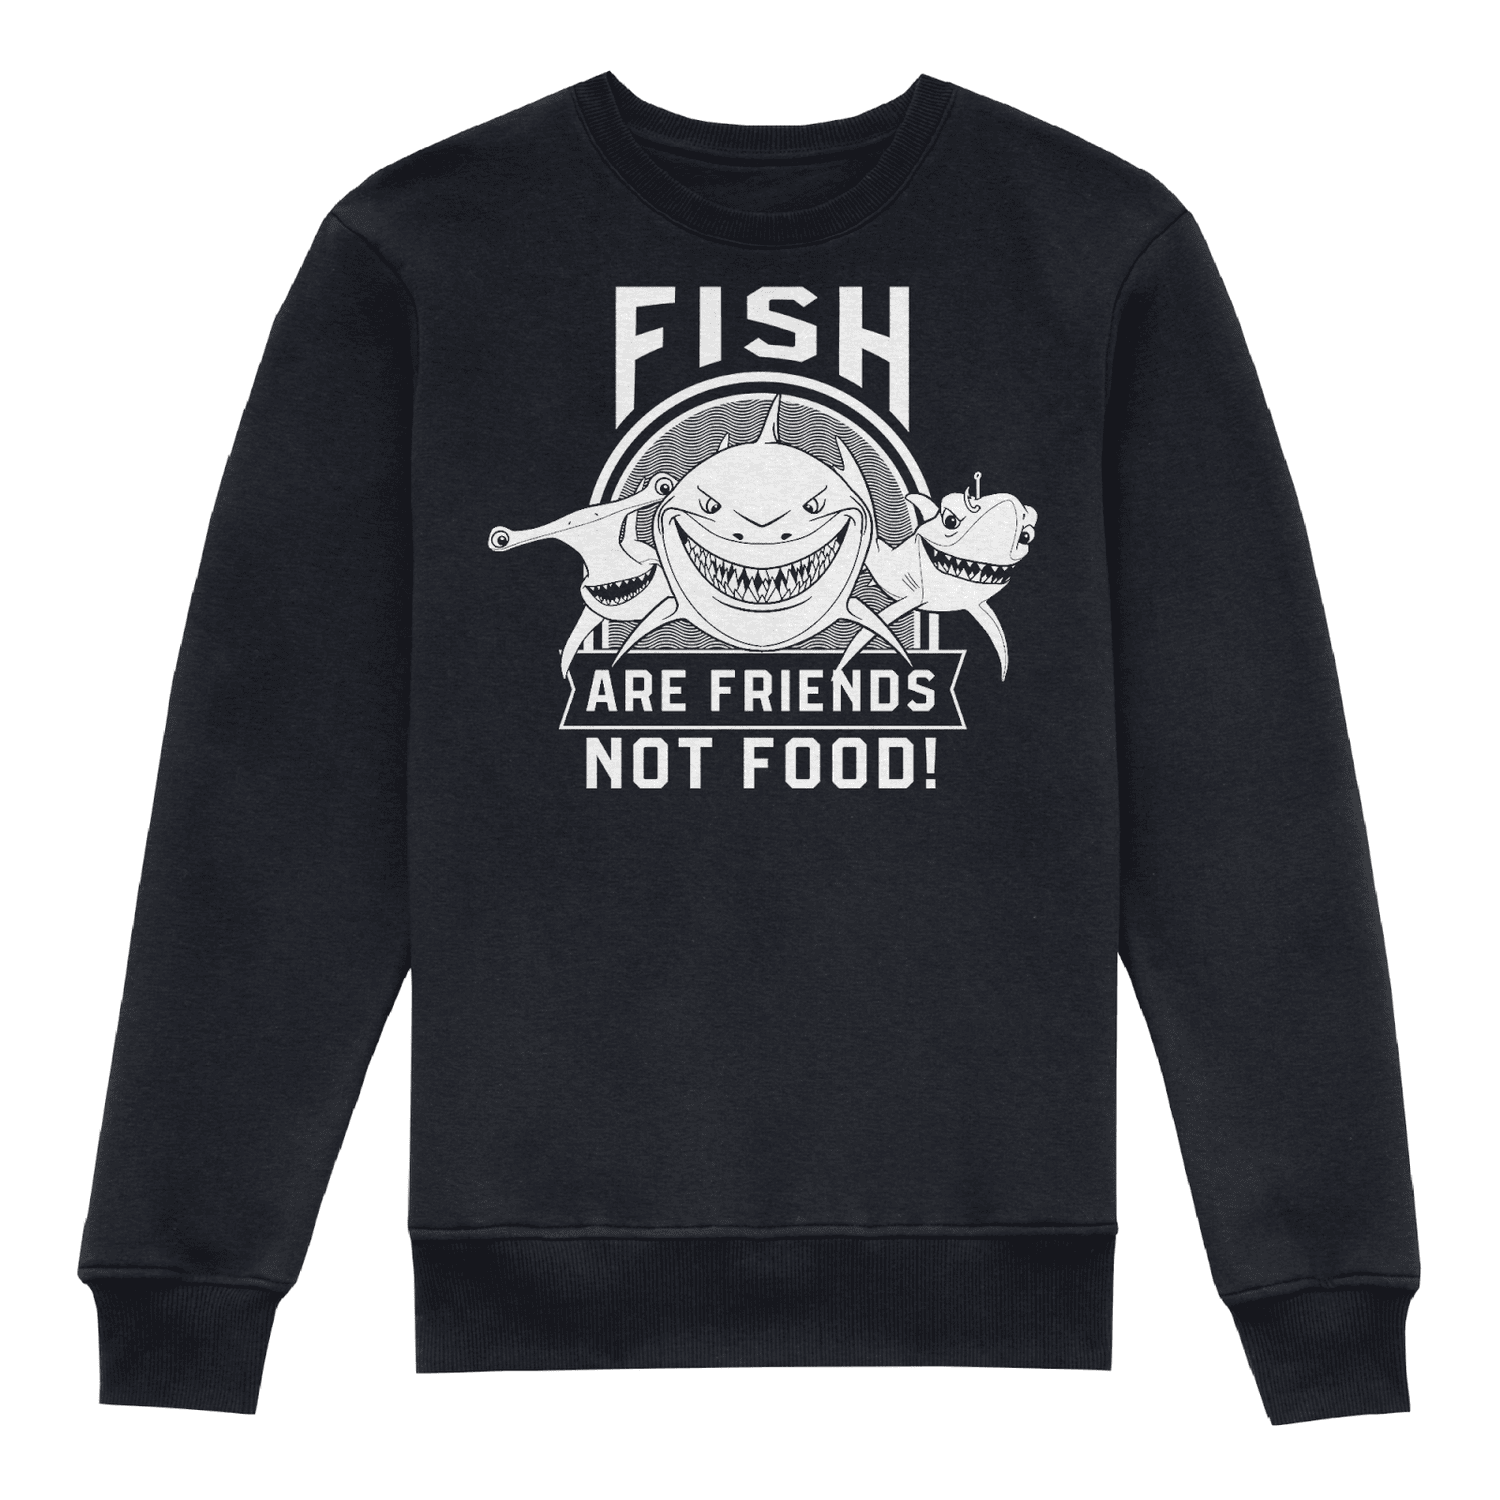 Finding Nemo Fish Are Friends Not Food Kids' Sweatshirt - Black 